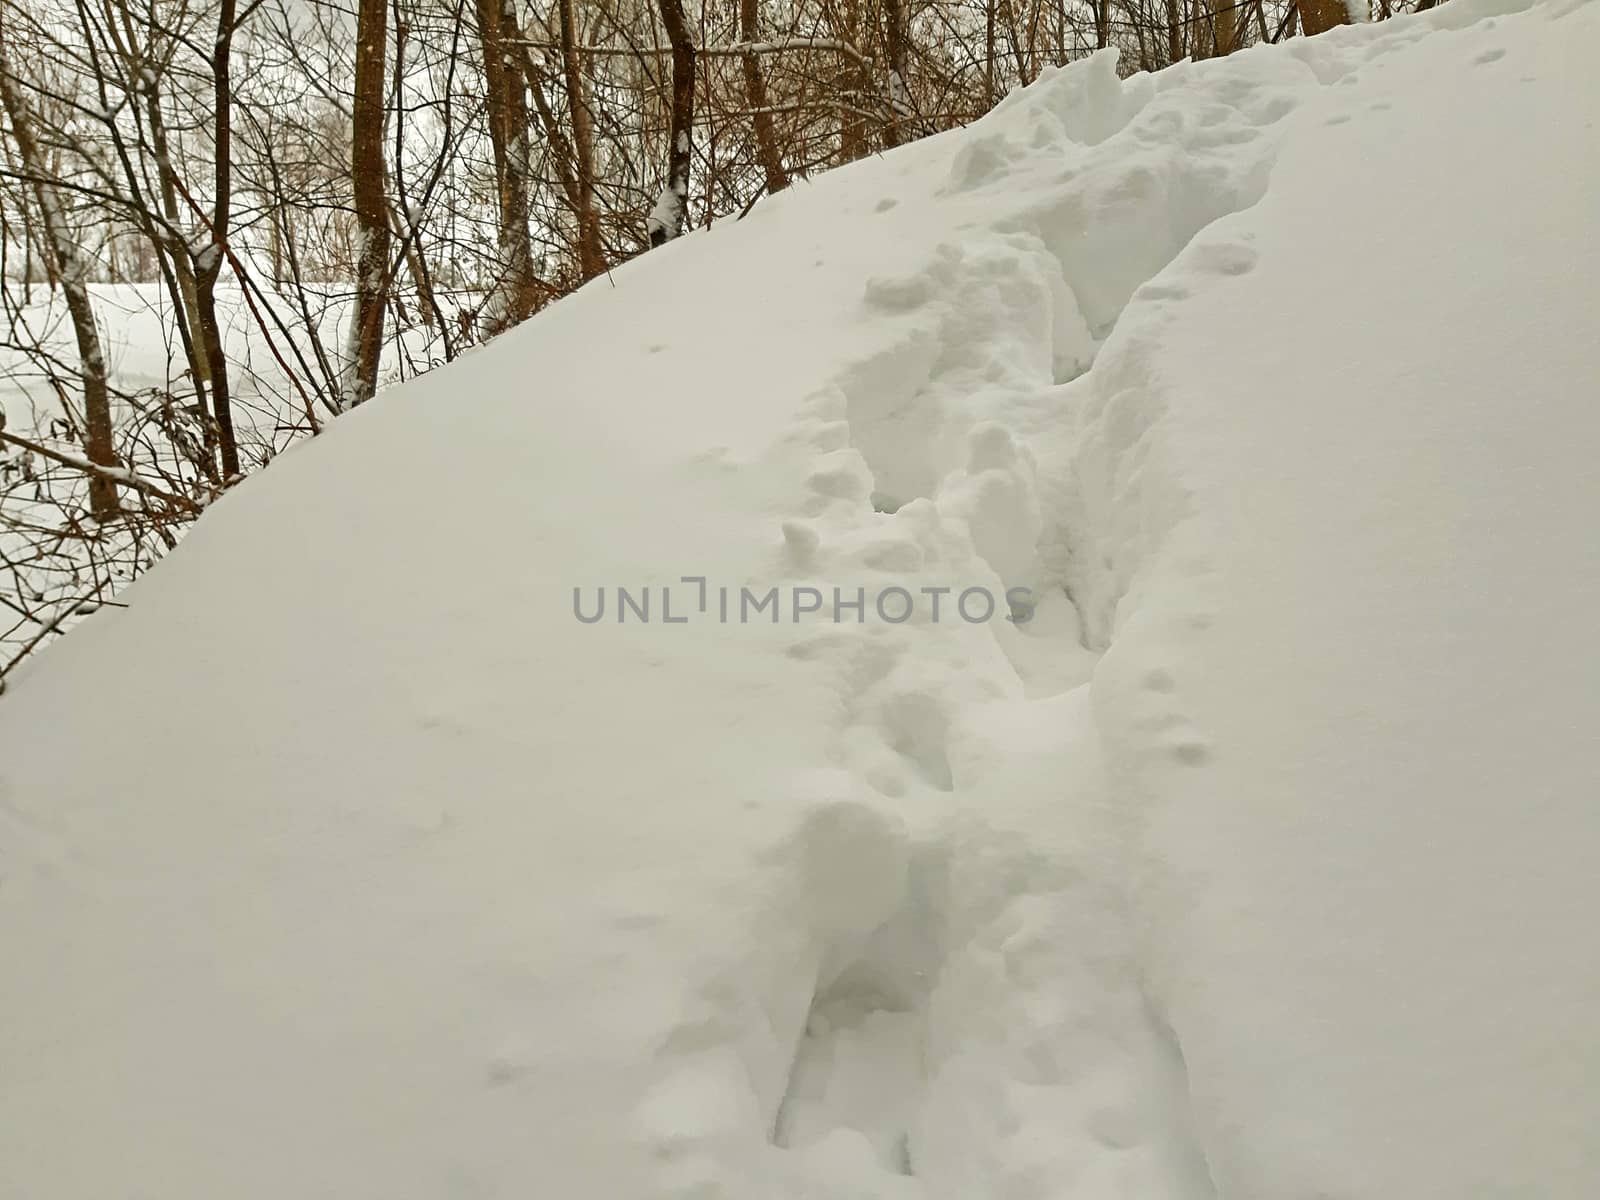 Deep Human footprints in the snow winter.